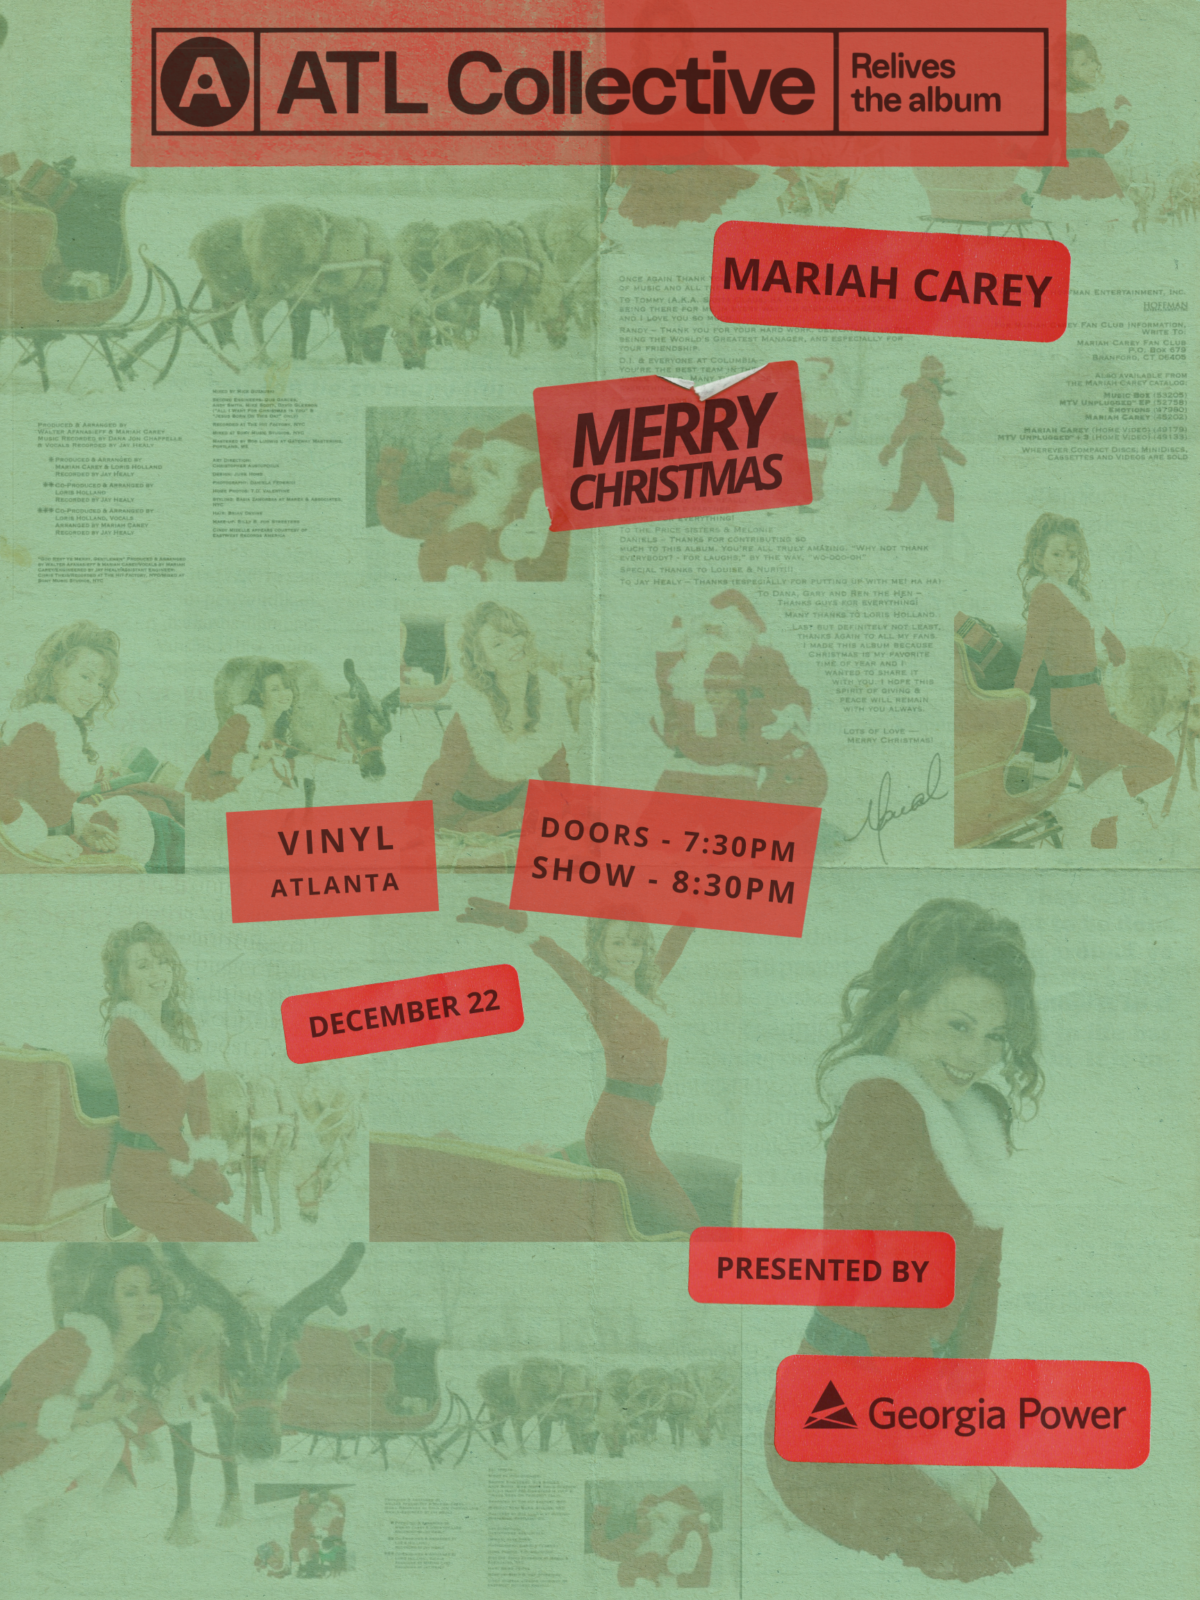 Merry Christmas: Mariah Carey